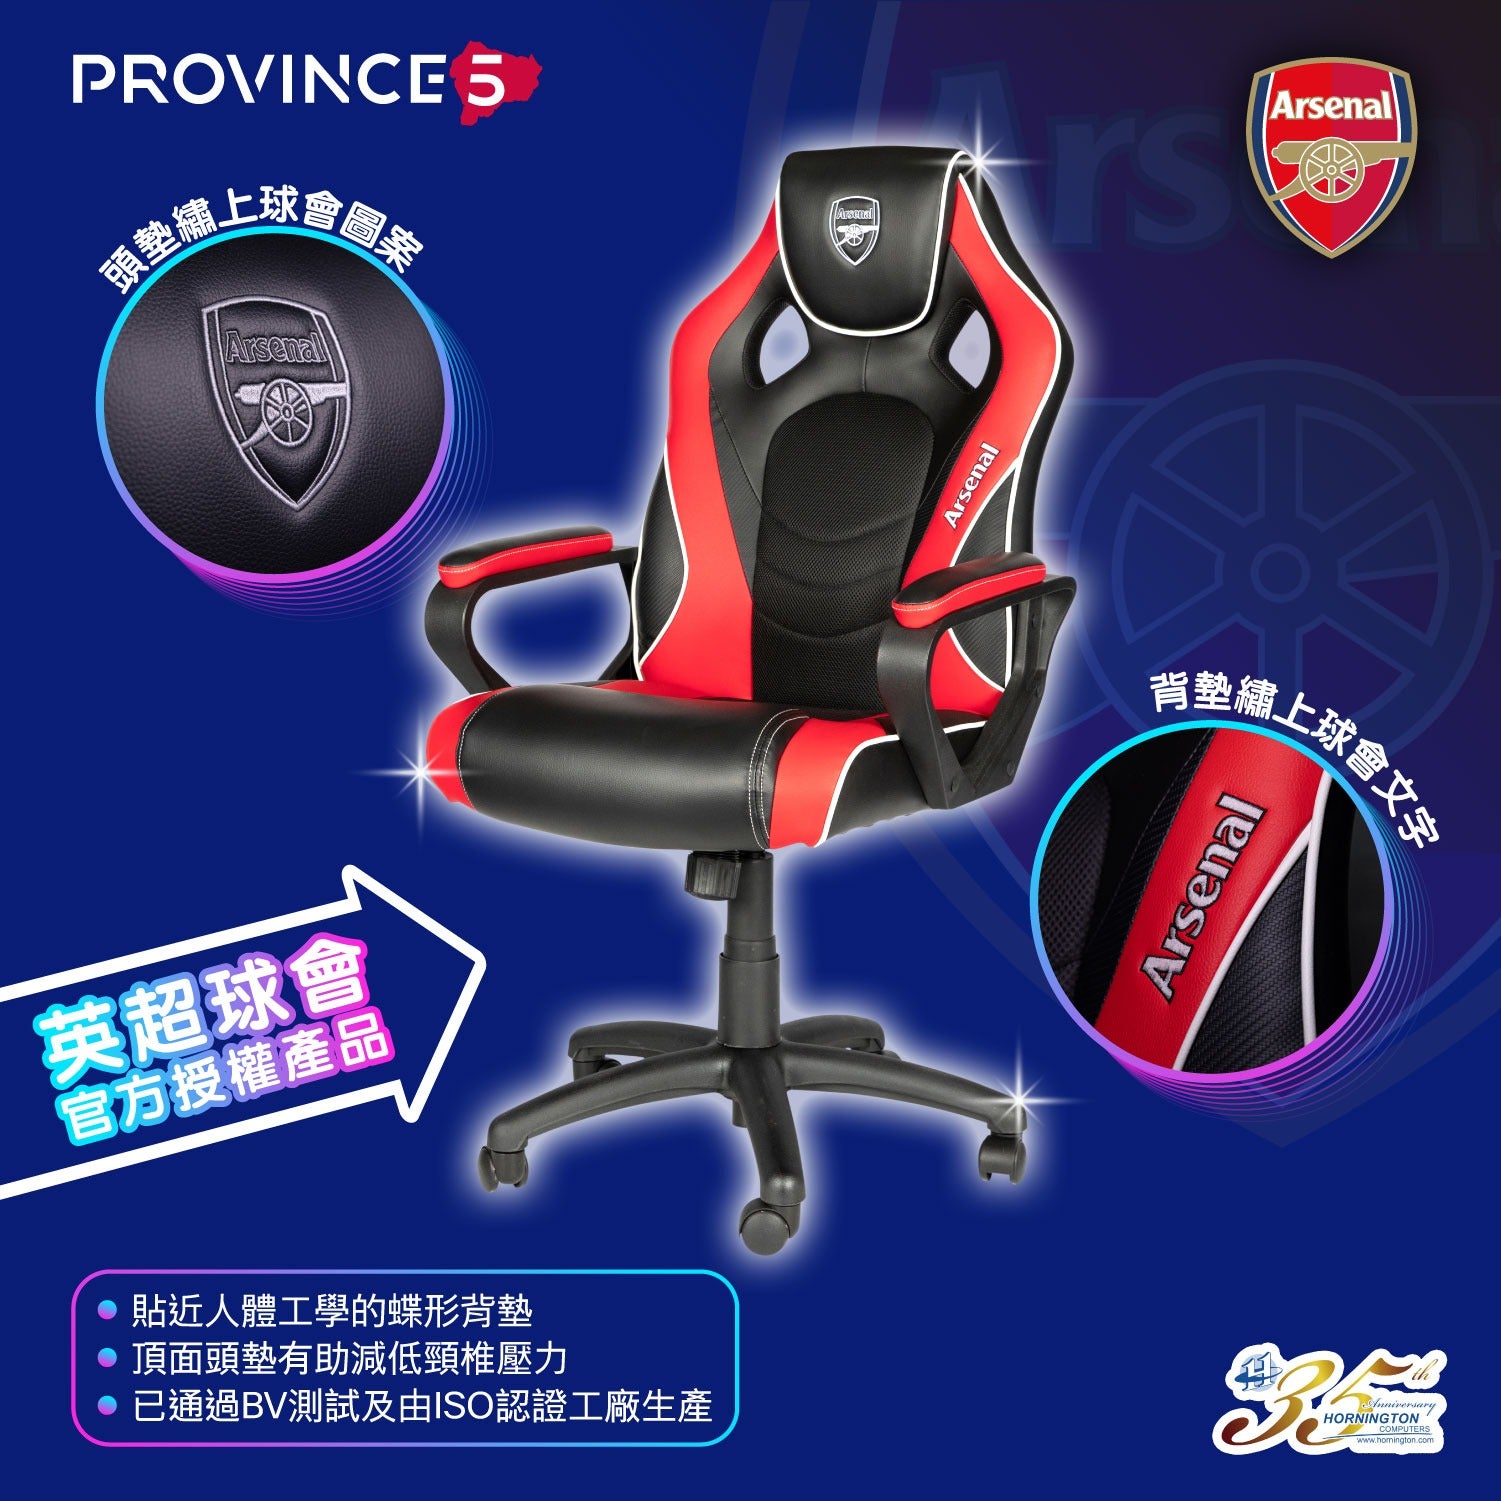 Province5 Quickshot gaming chair (英超球會授權)